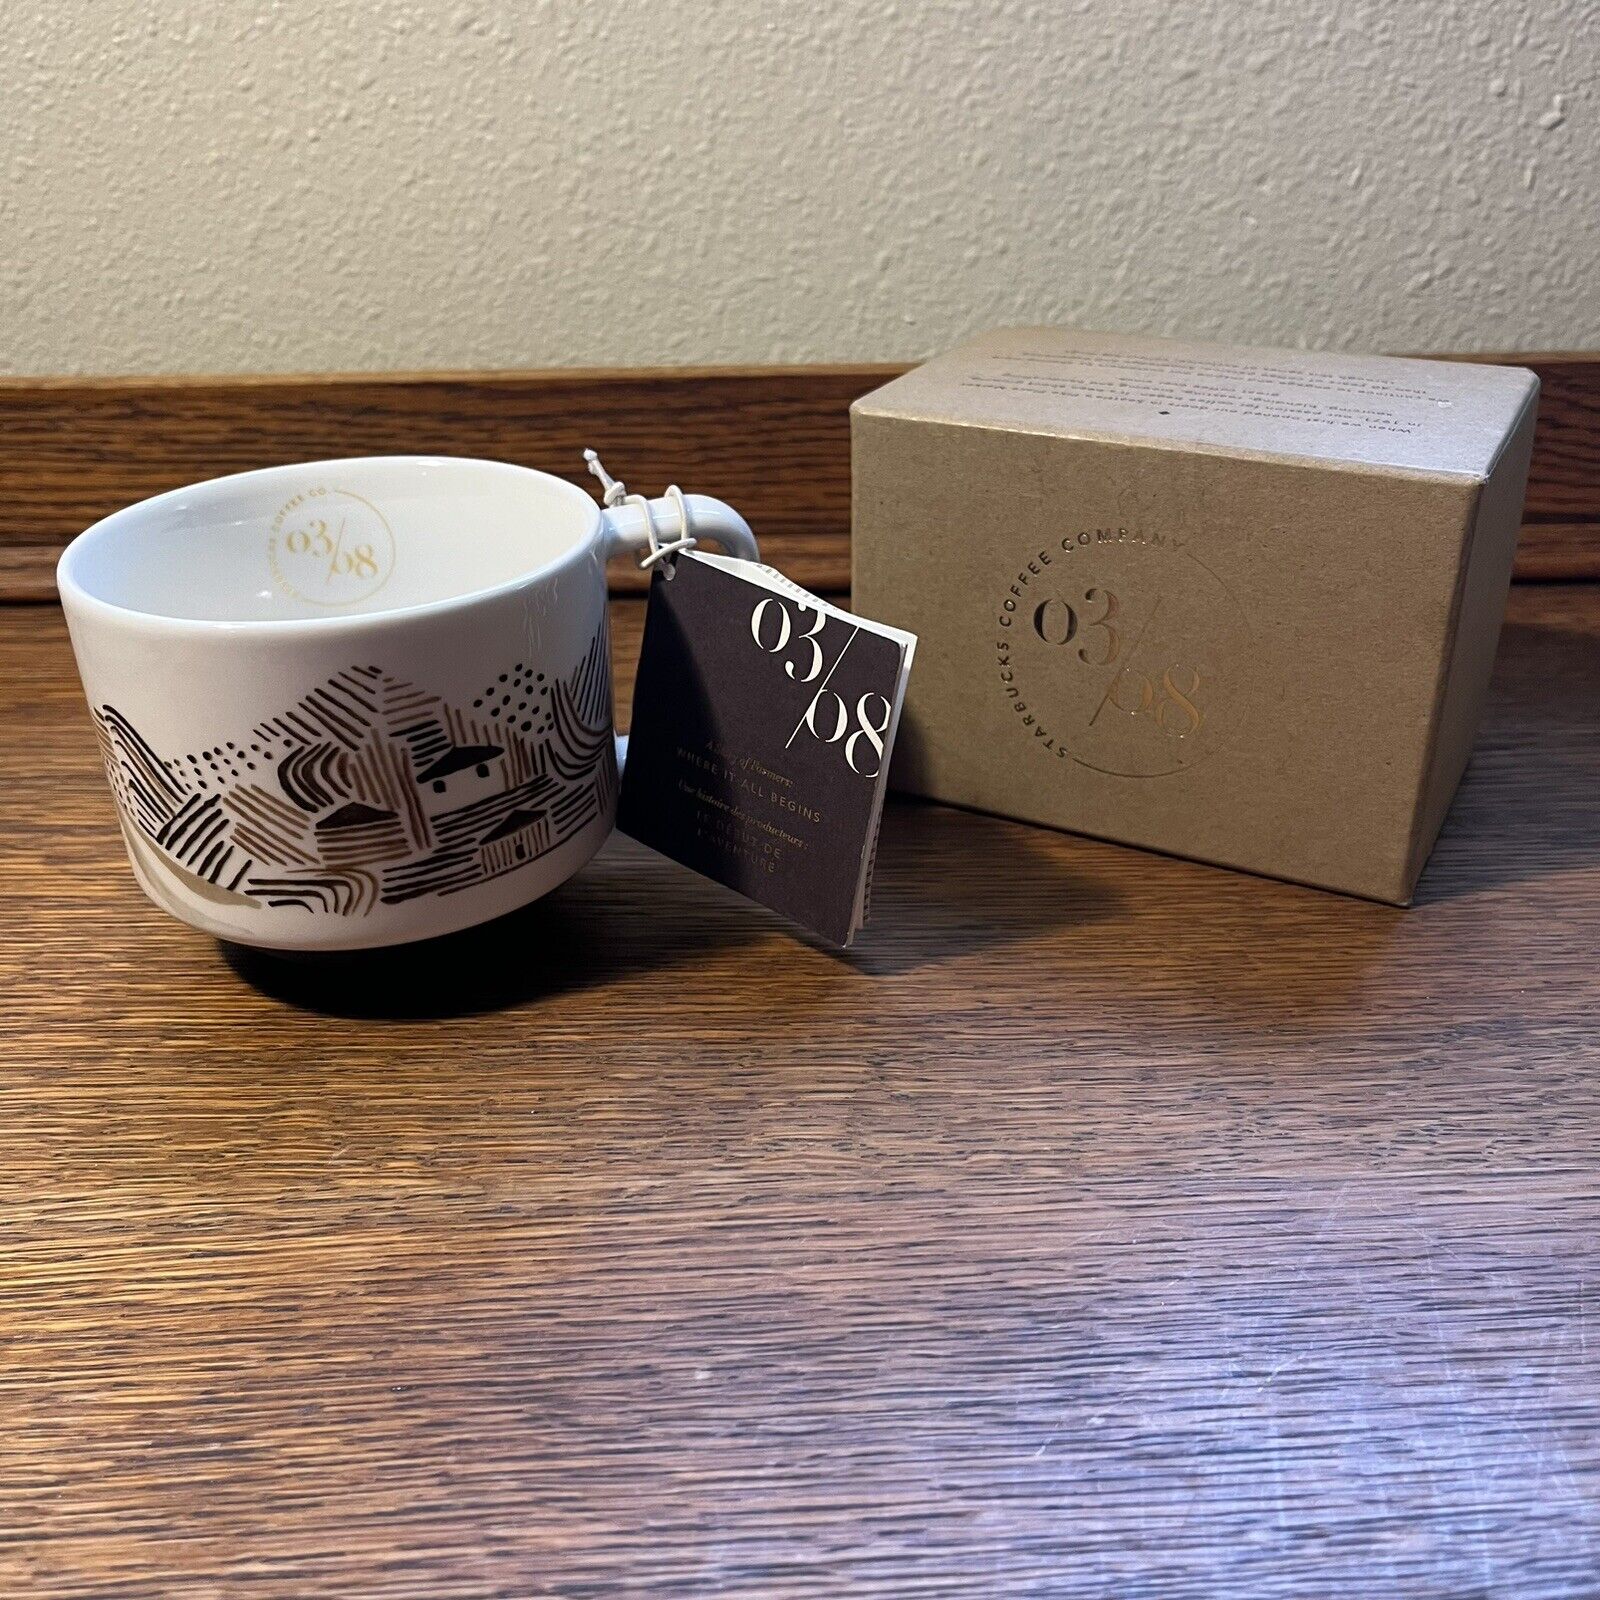 Starbucks Coffee Mug Artisan Series A Story Of Farmers 03 08 Porcelain New